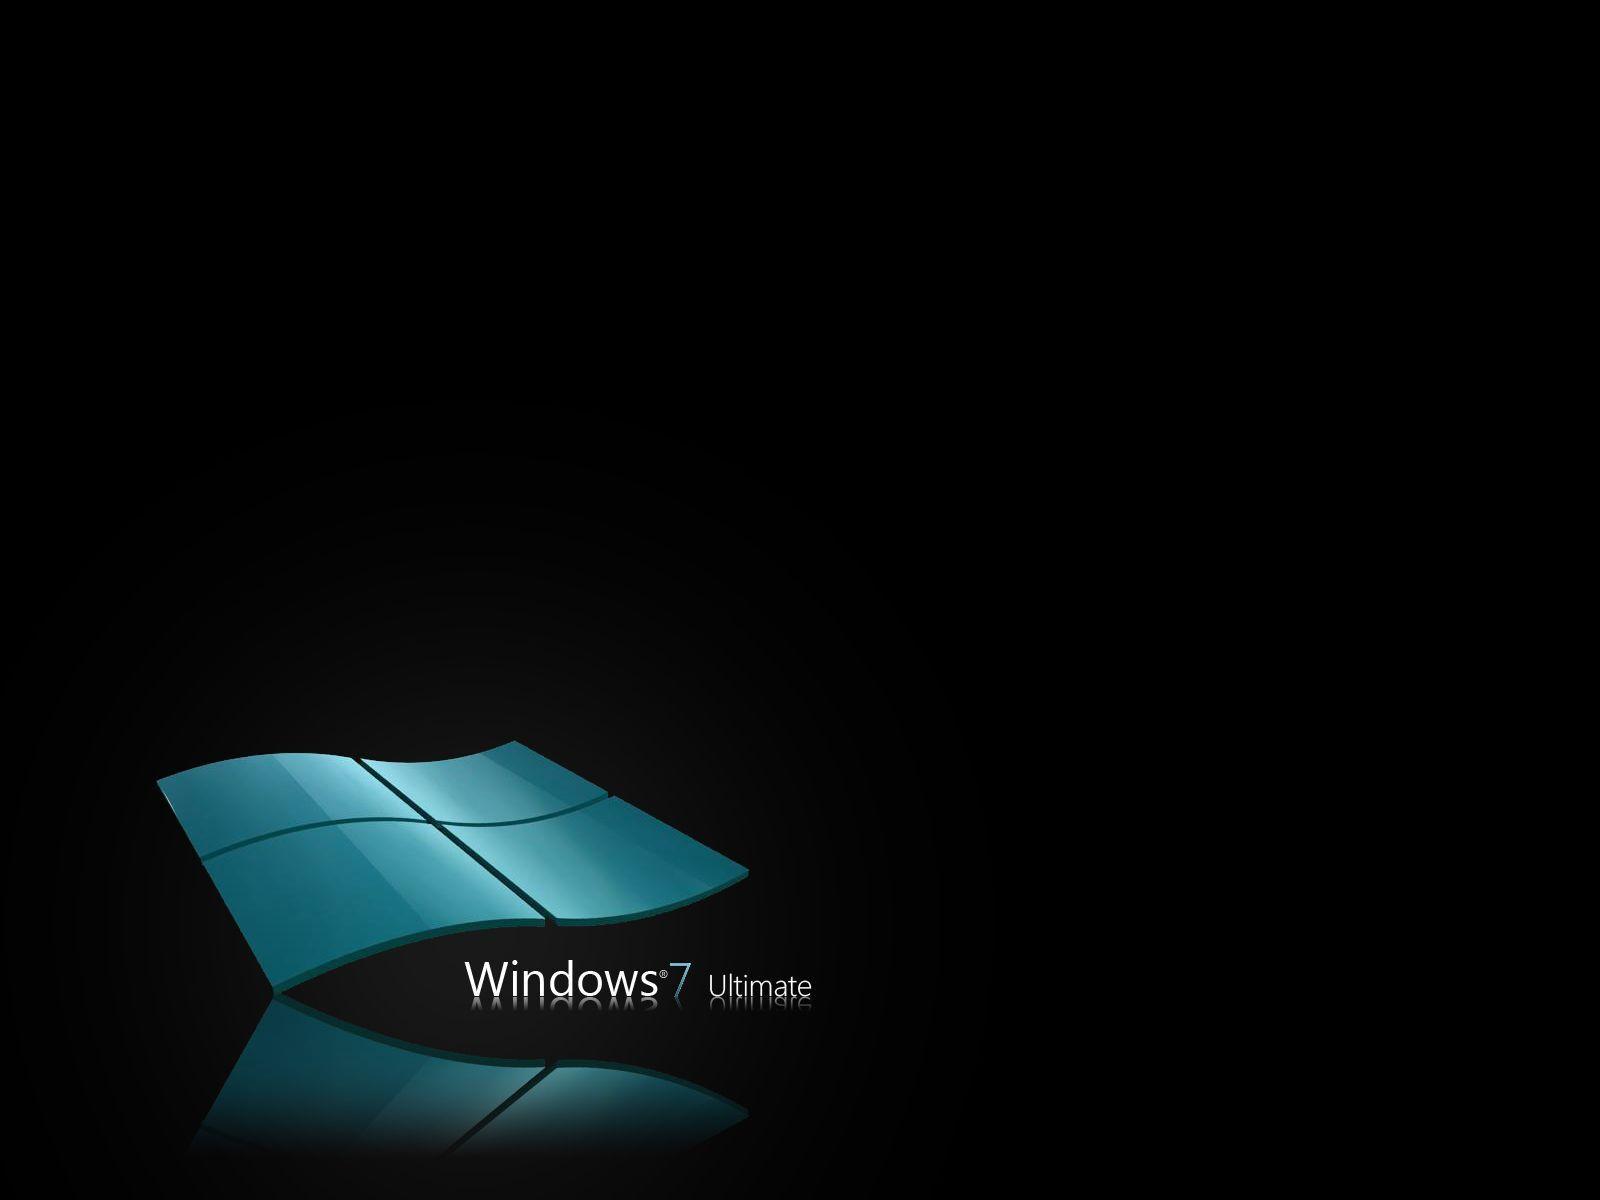 Windows 7 Ultimate 3D Logo Black Background Wallpaper